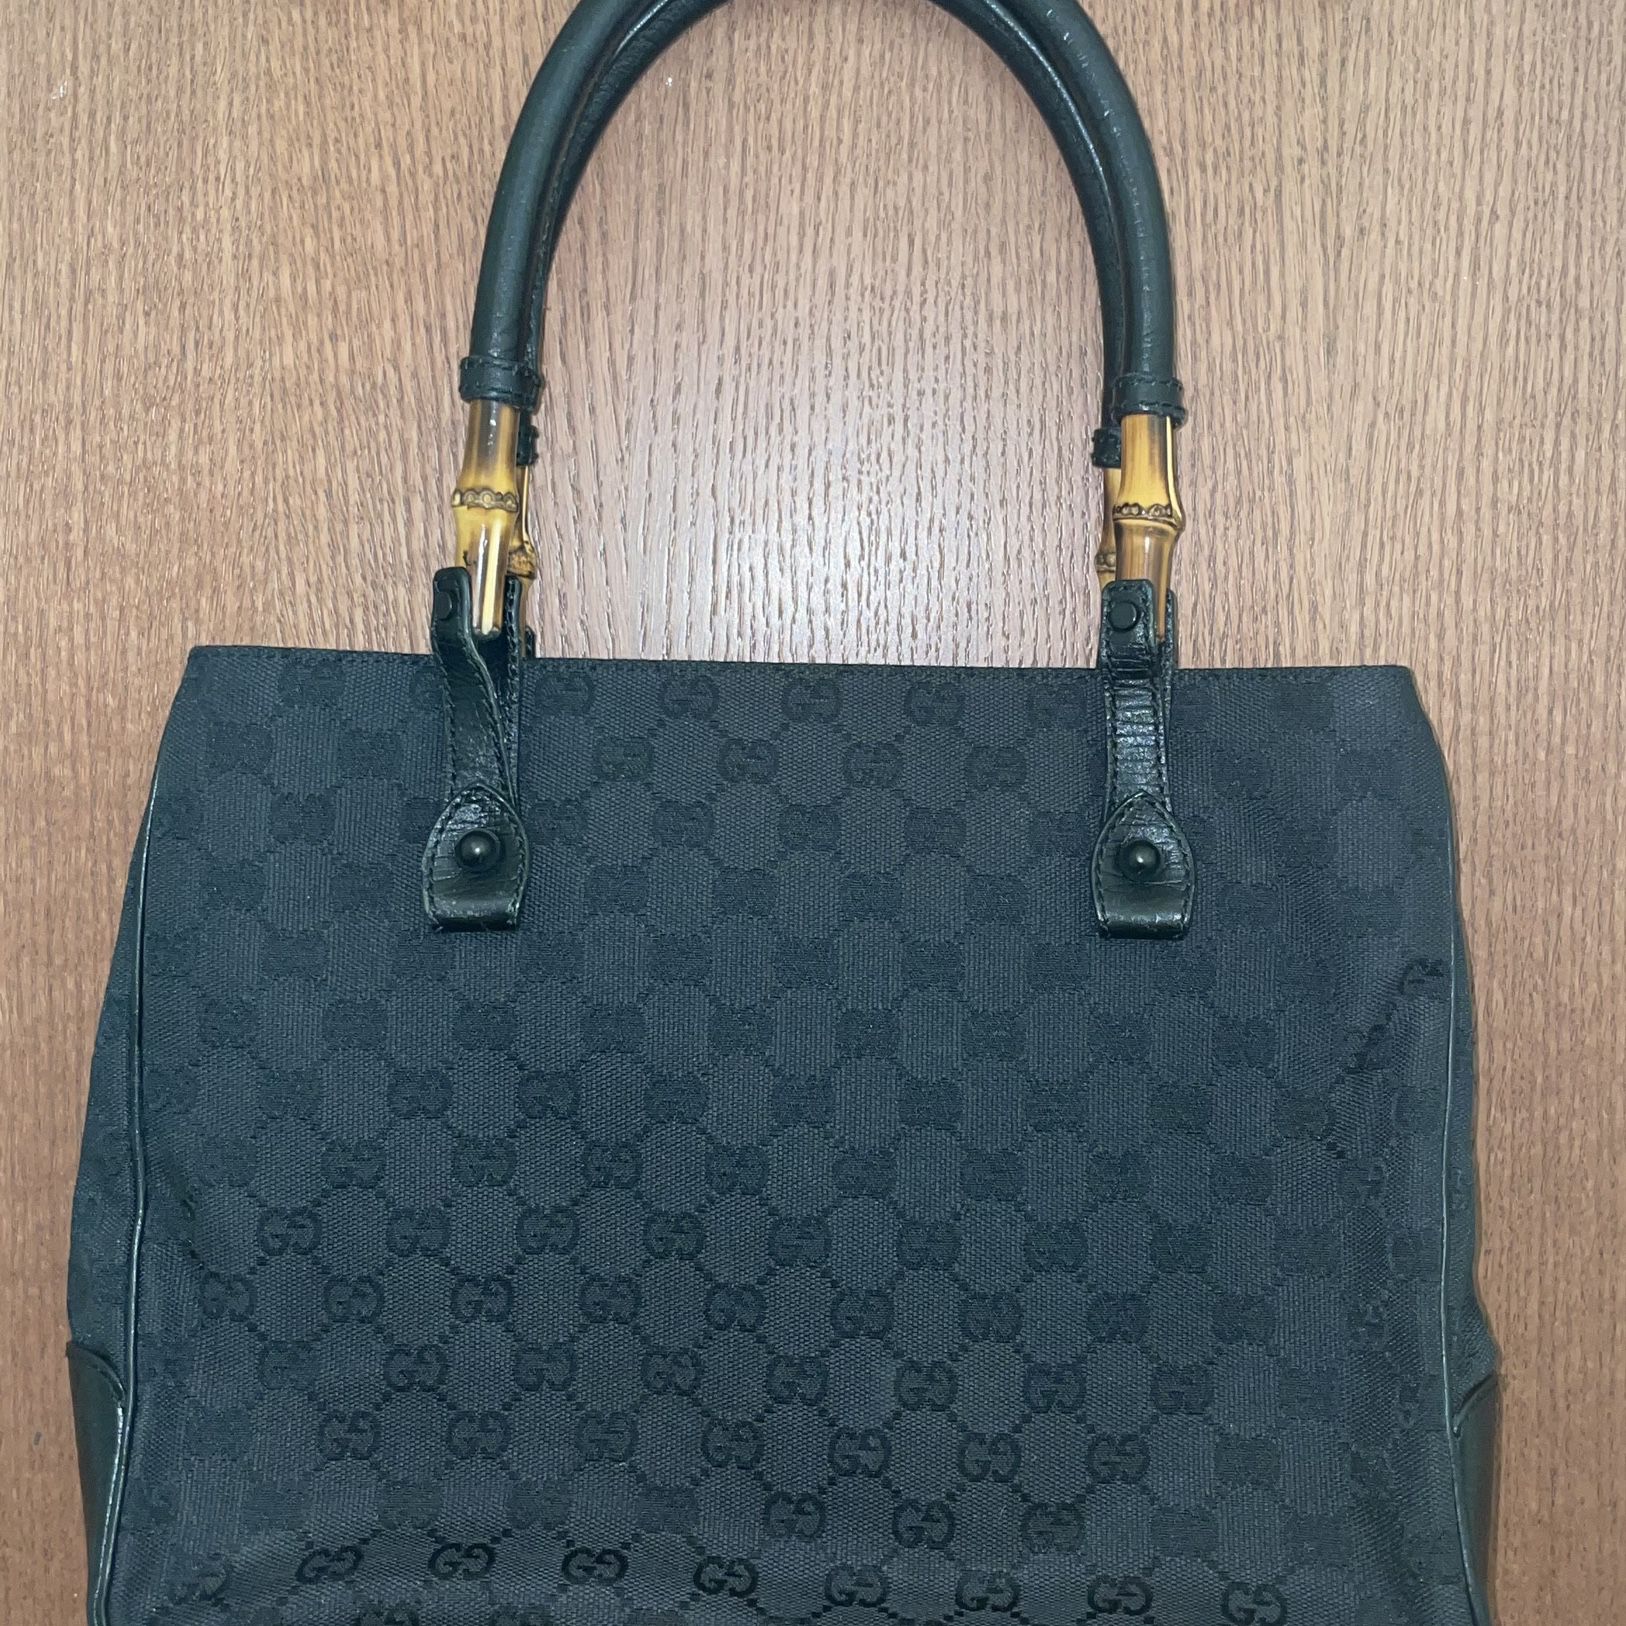 Gucci GG Black Canvas and Leather Handbag